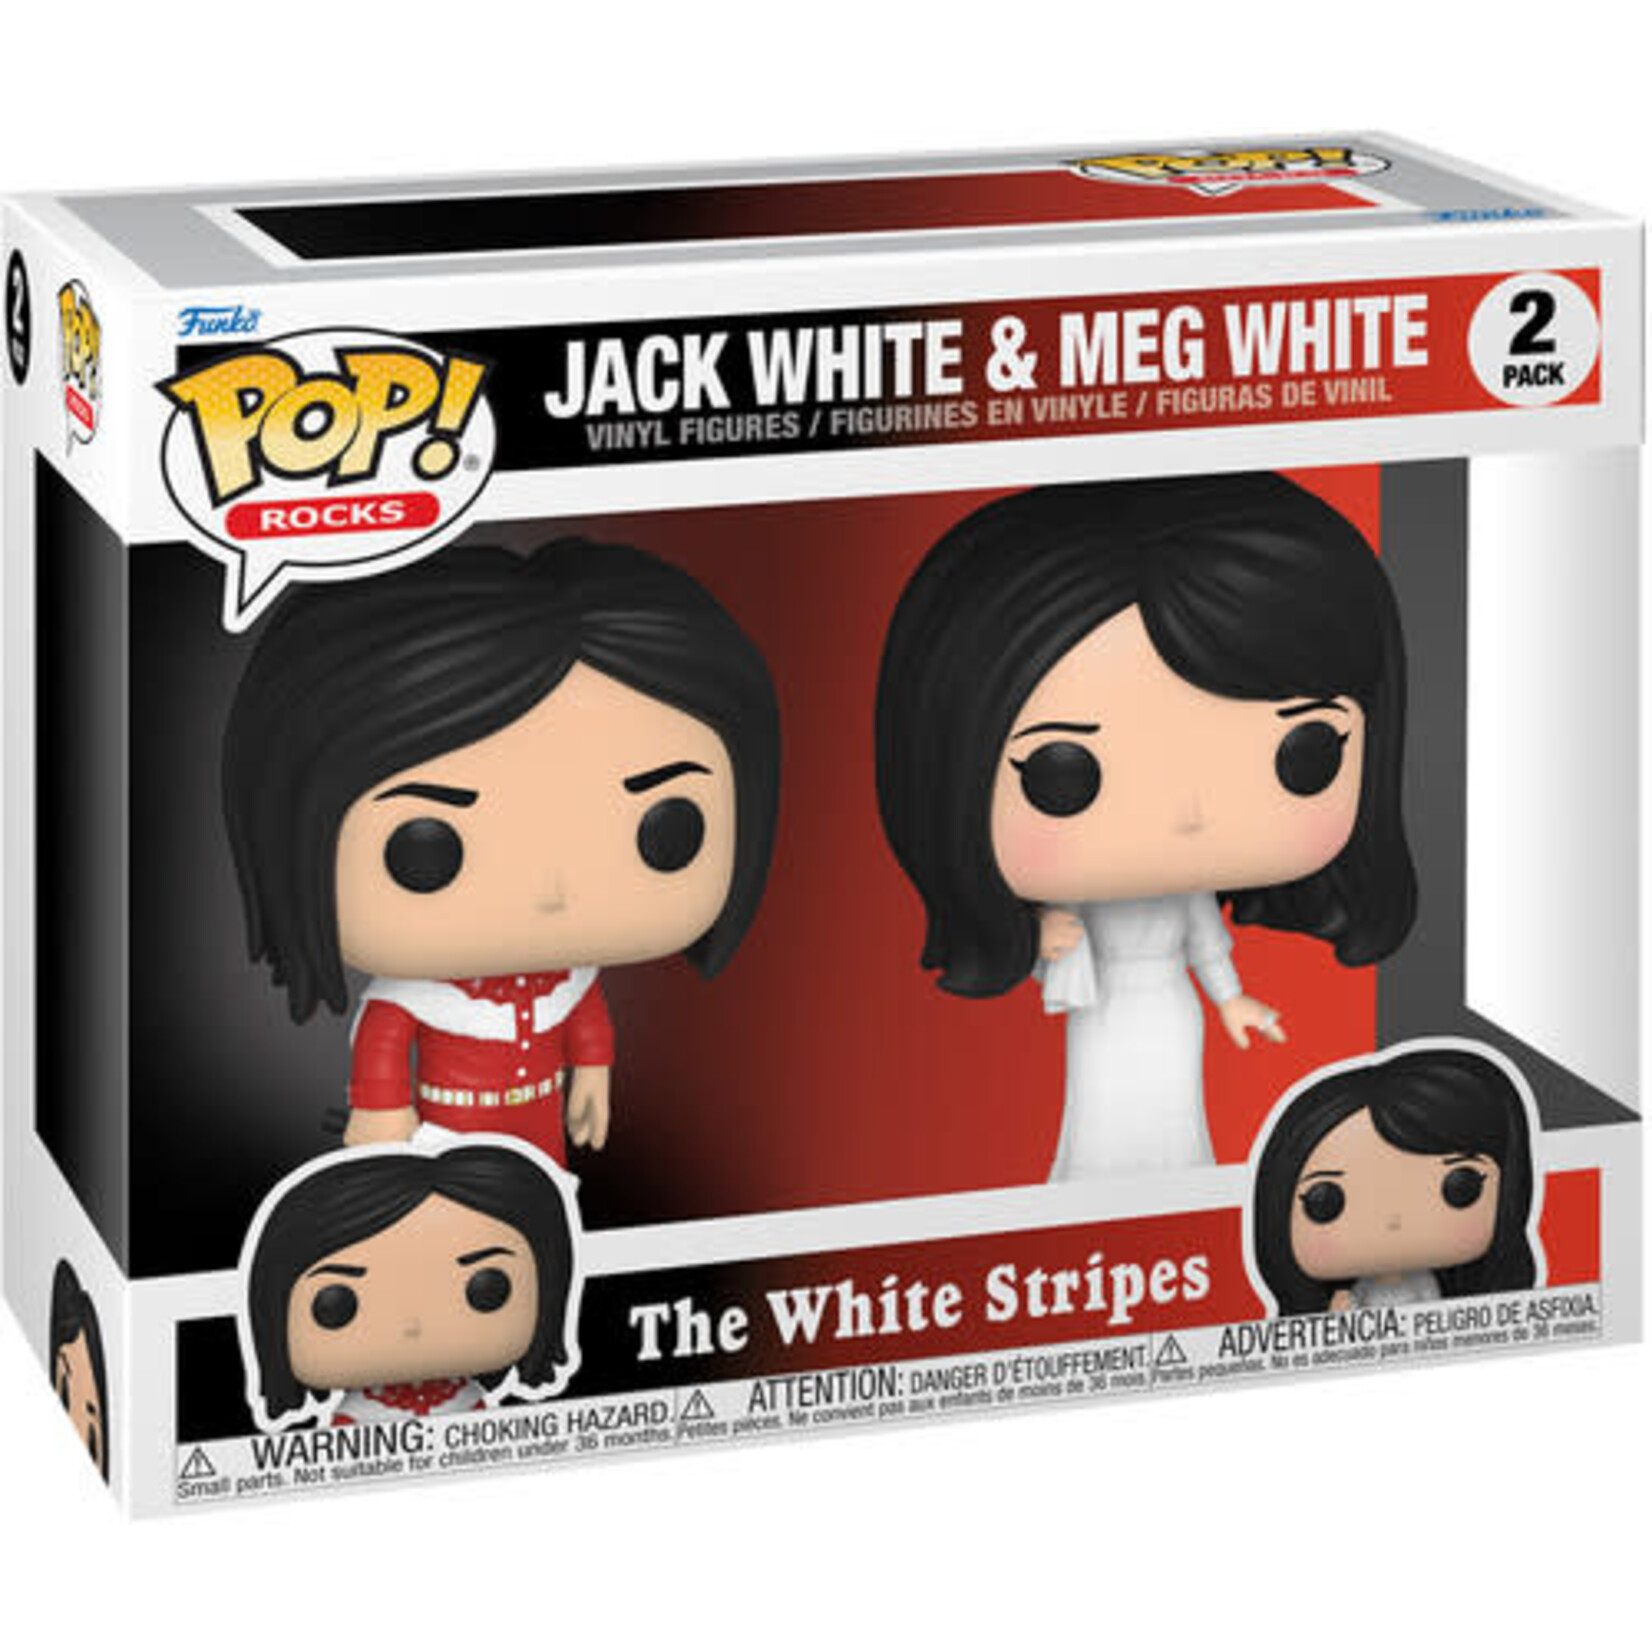 Pop! Rocks - White Stripes: Jack White & Meg White - Vinyl Figures (NEW)